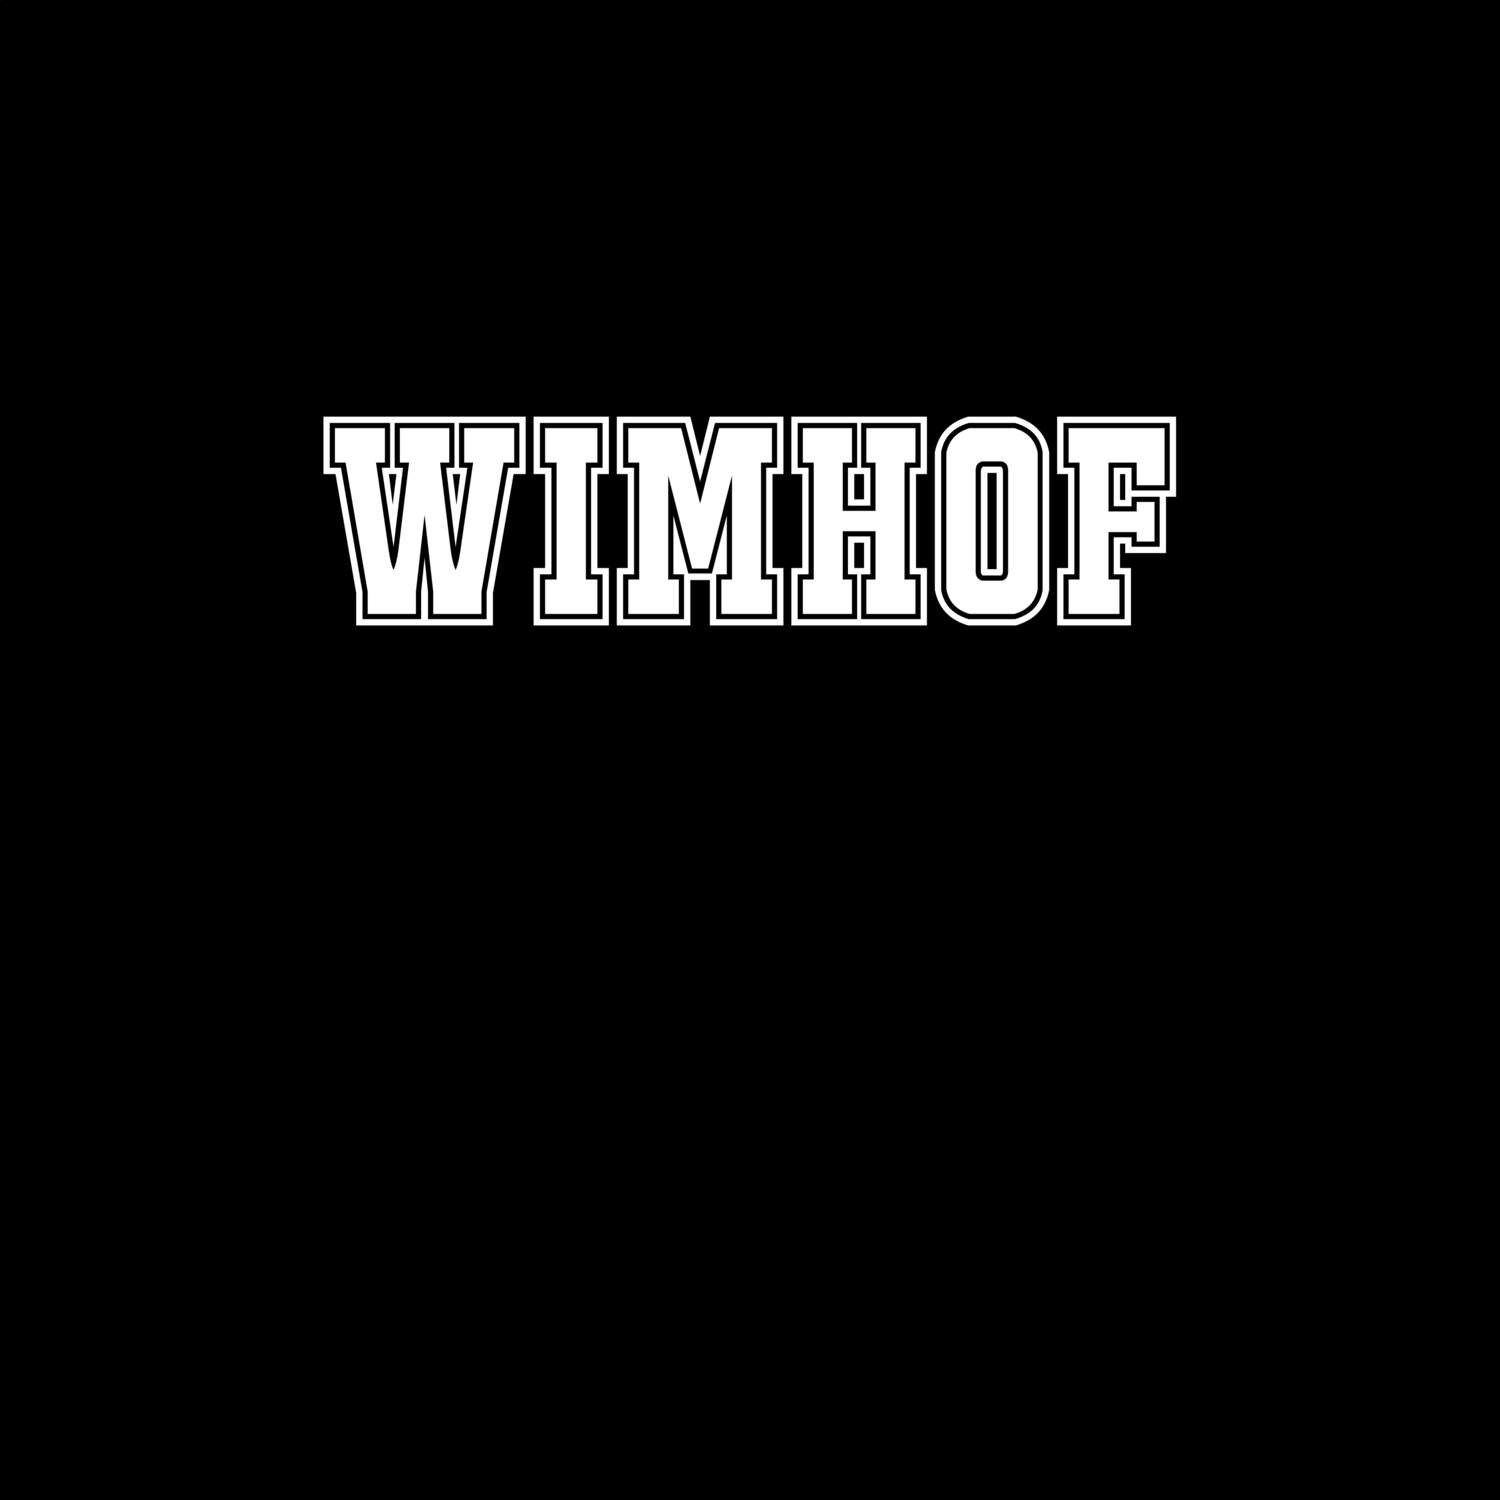 Wimhof T-Shirt »Classic«